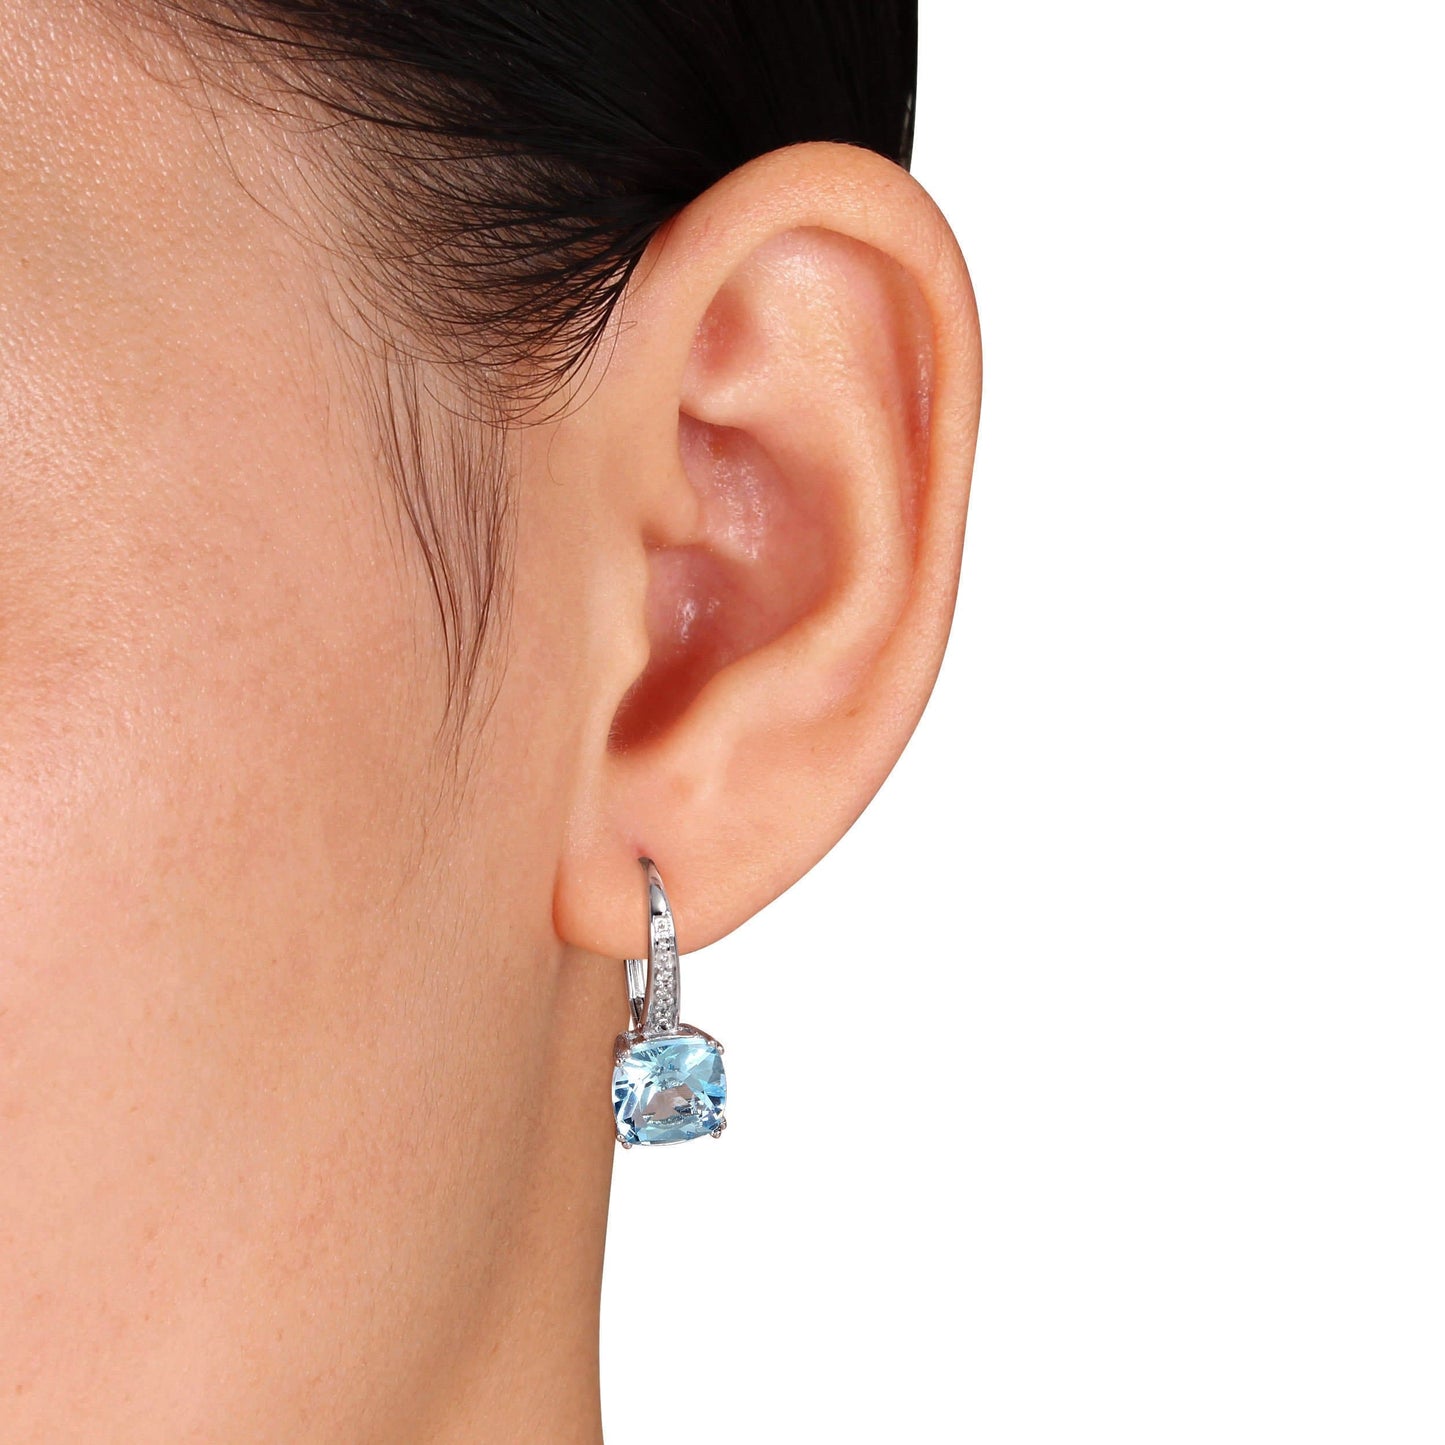 Sophia B 5ct Topaz  Drop Earrings with Diamond Accents